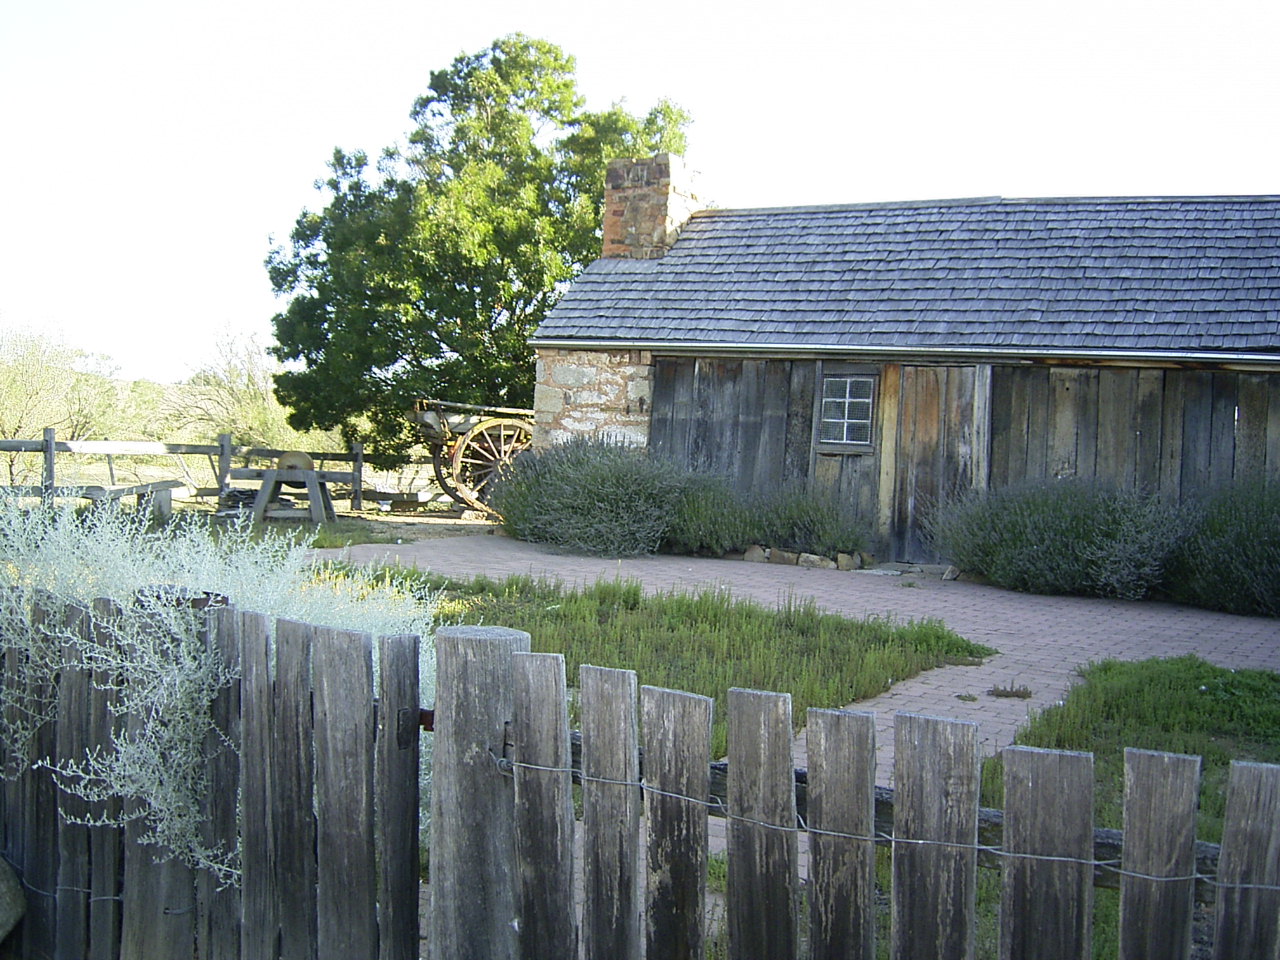 Early Settlers hut